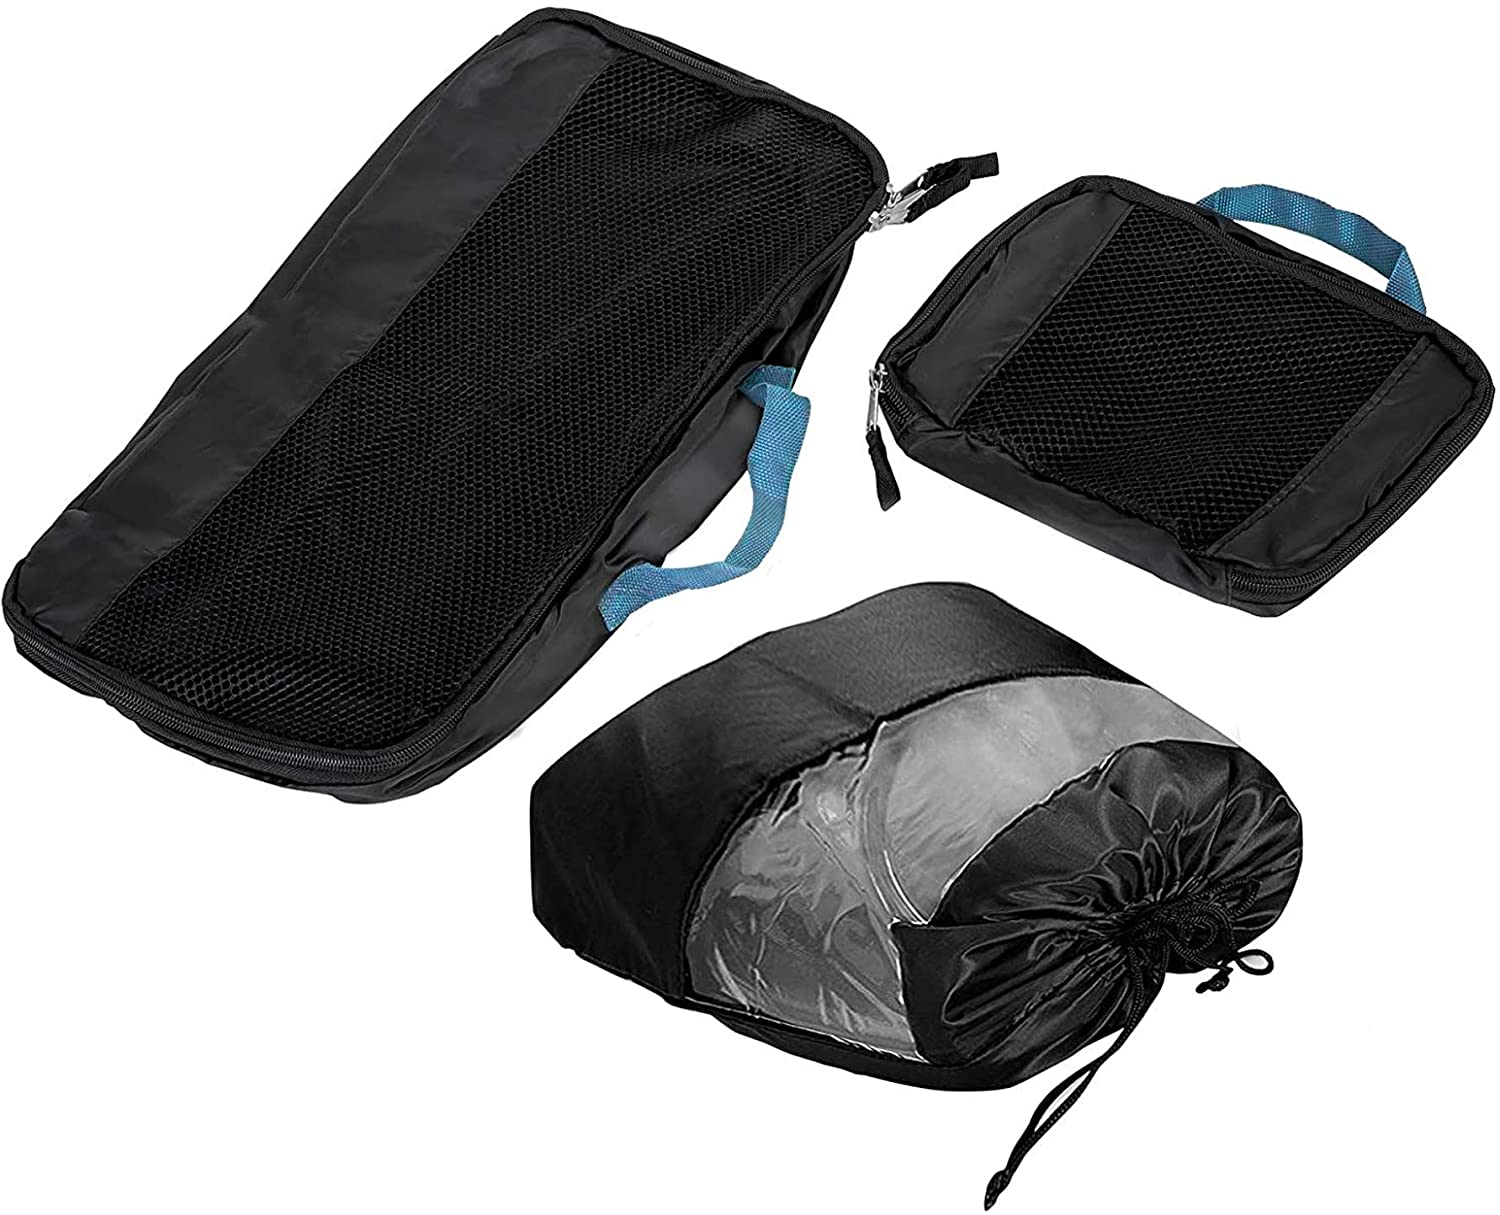 Mesh Travel and Shoe Bag 3 Piece Set | Smart Design Storage